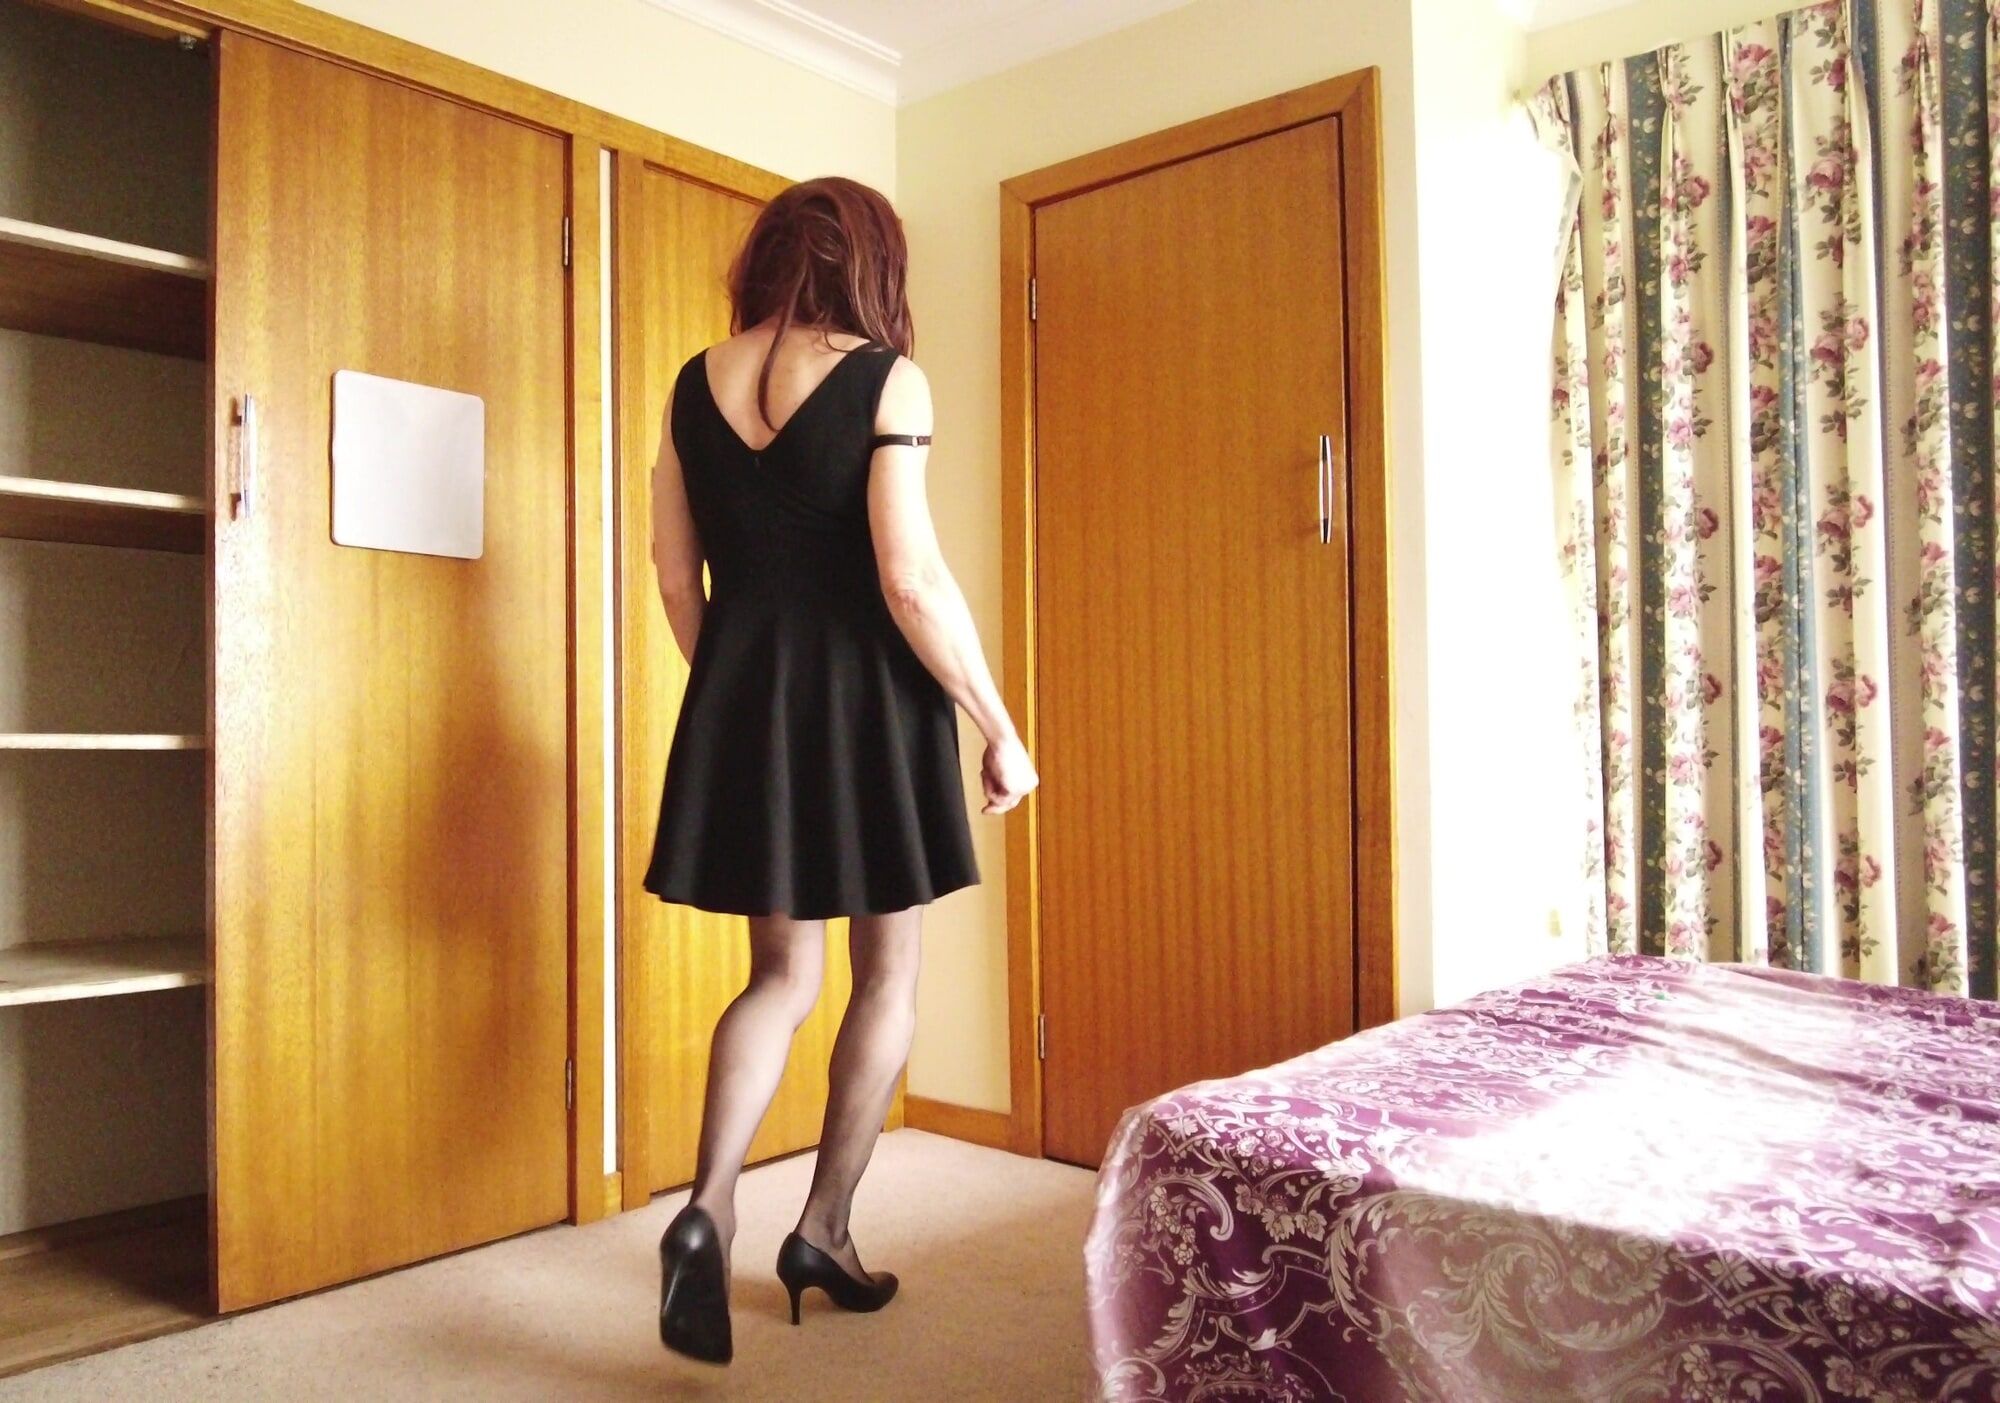 Crossdress - Little Black dress #4